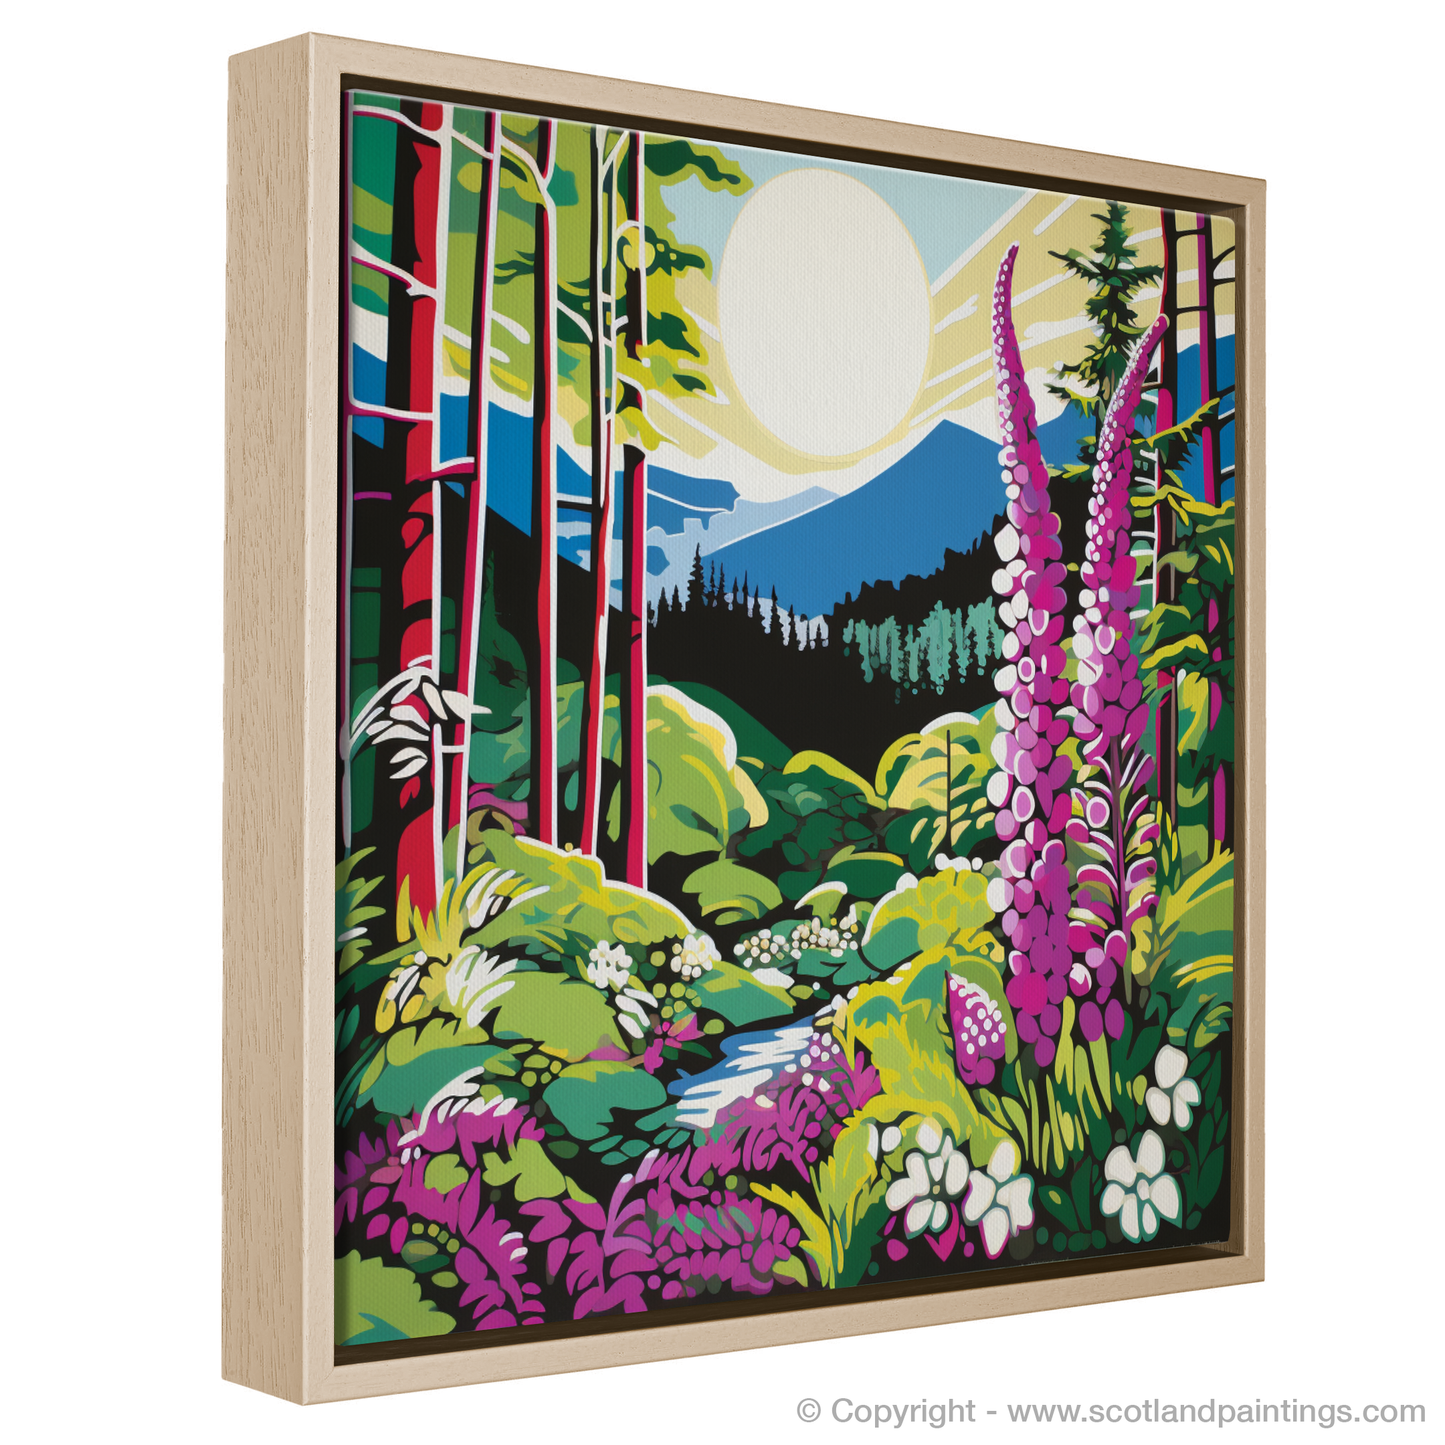 Scottish Highlands in Bloom: A Pop Art Tribute to Foxglove Splendour